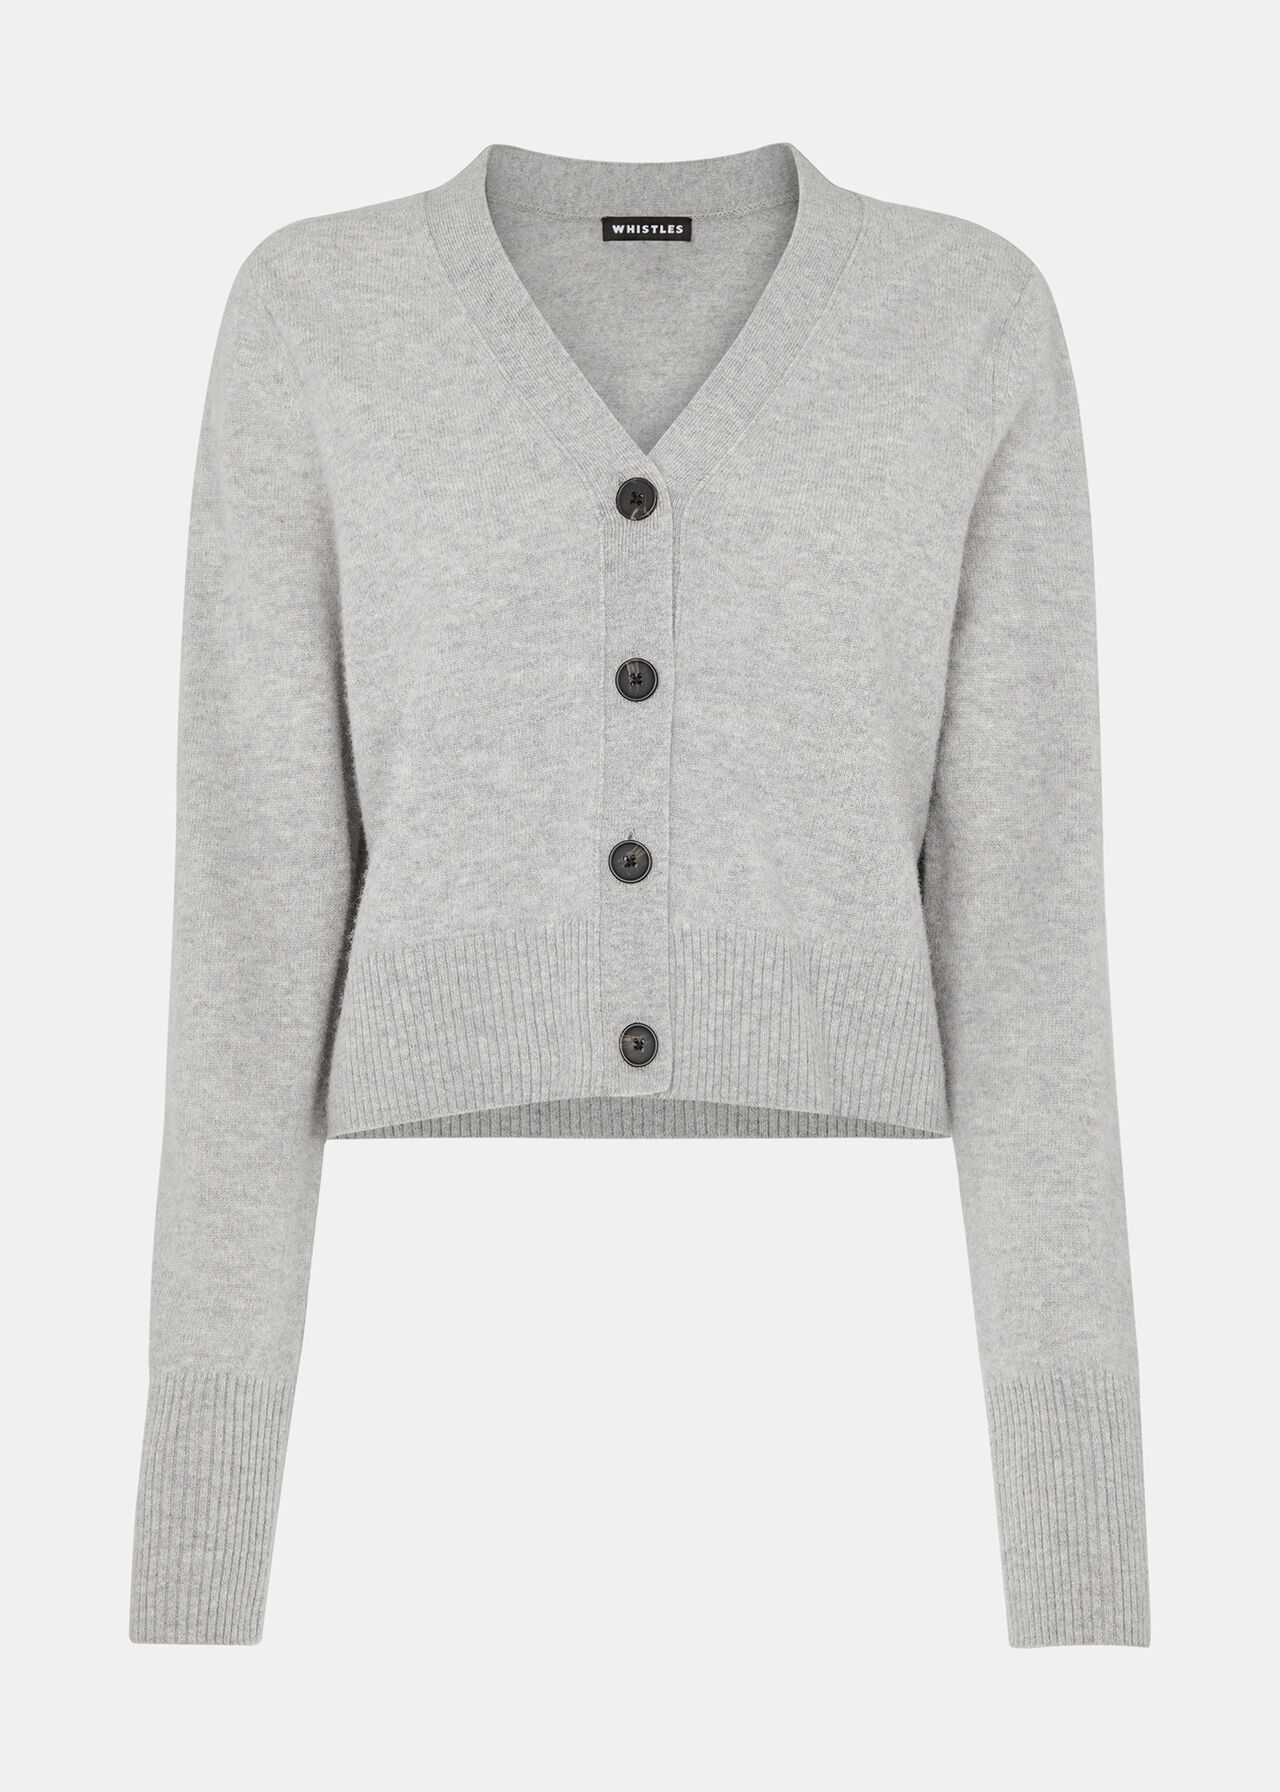 Shop the Grey Cropped Wool Cardigan at Whistles | Whistles UK